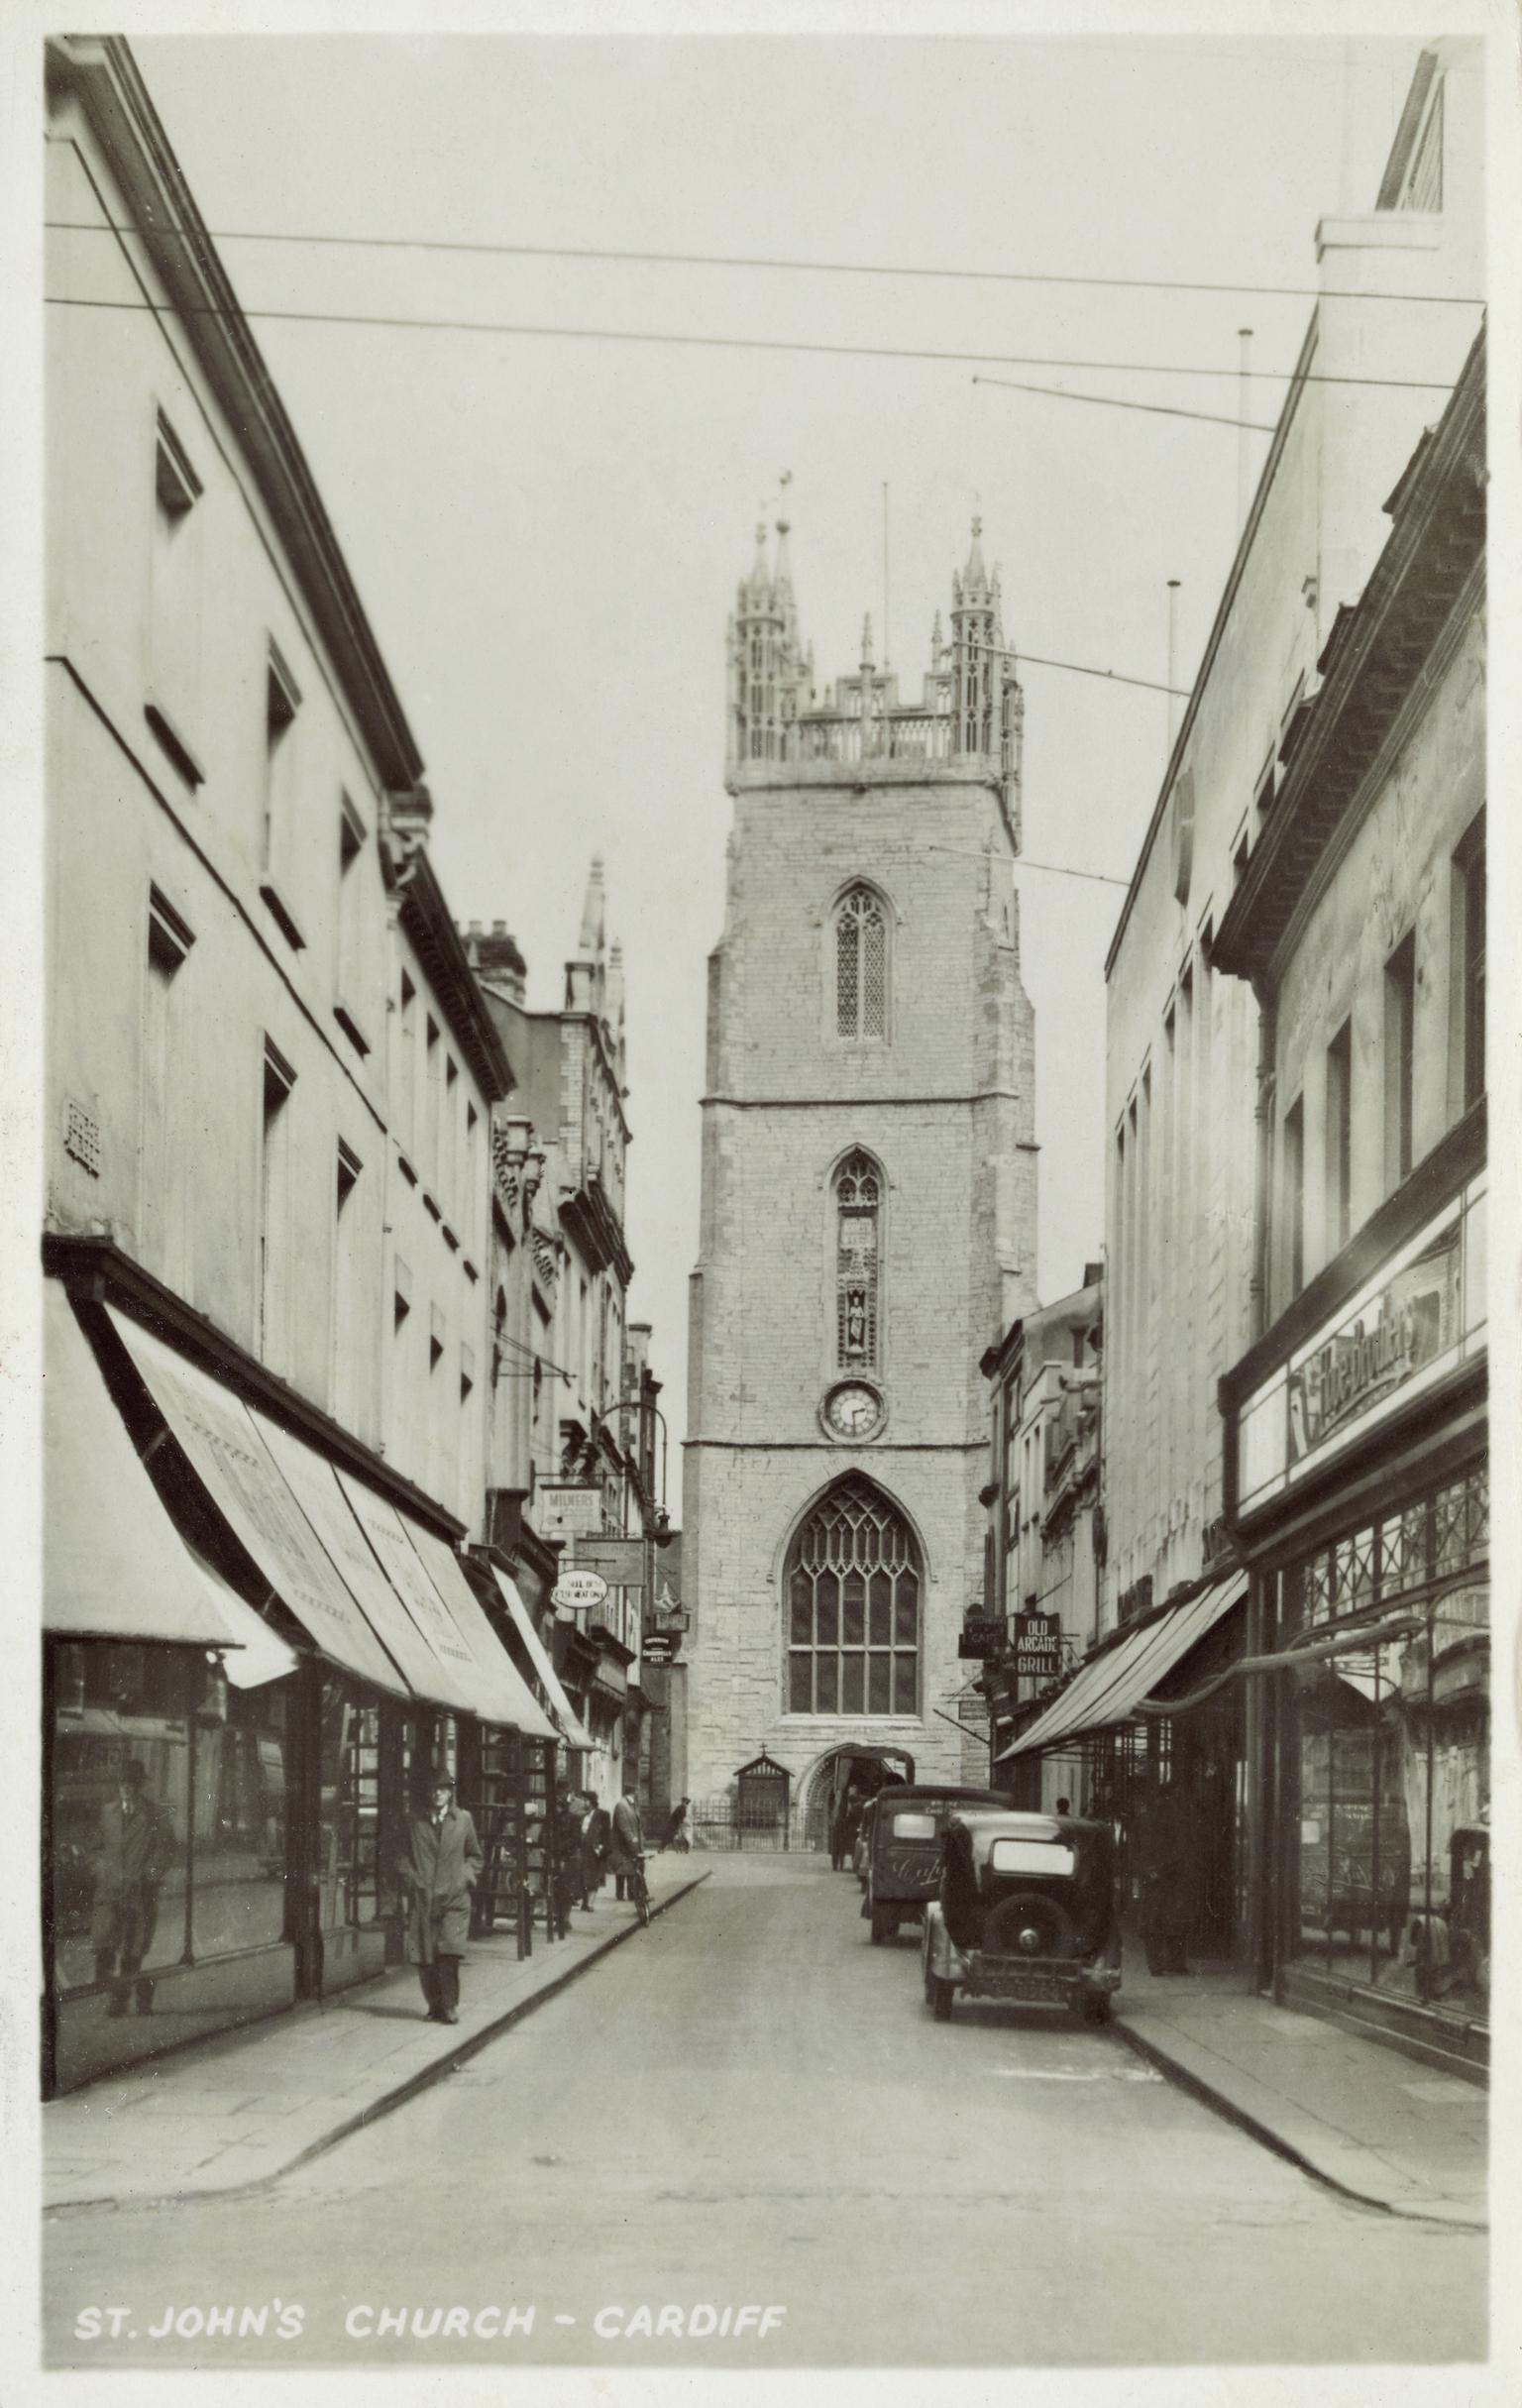 St. John's Church - Cardiff (postcard)